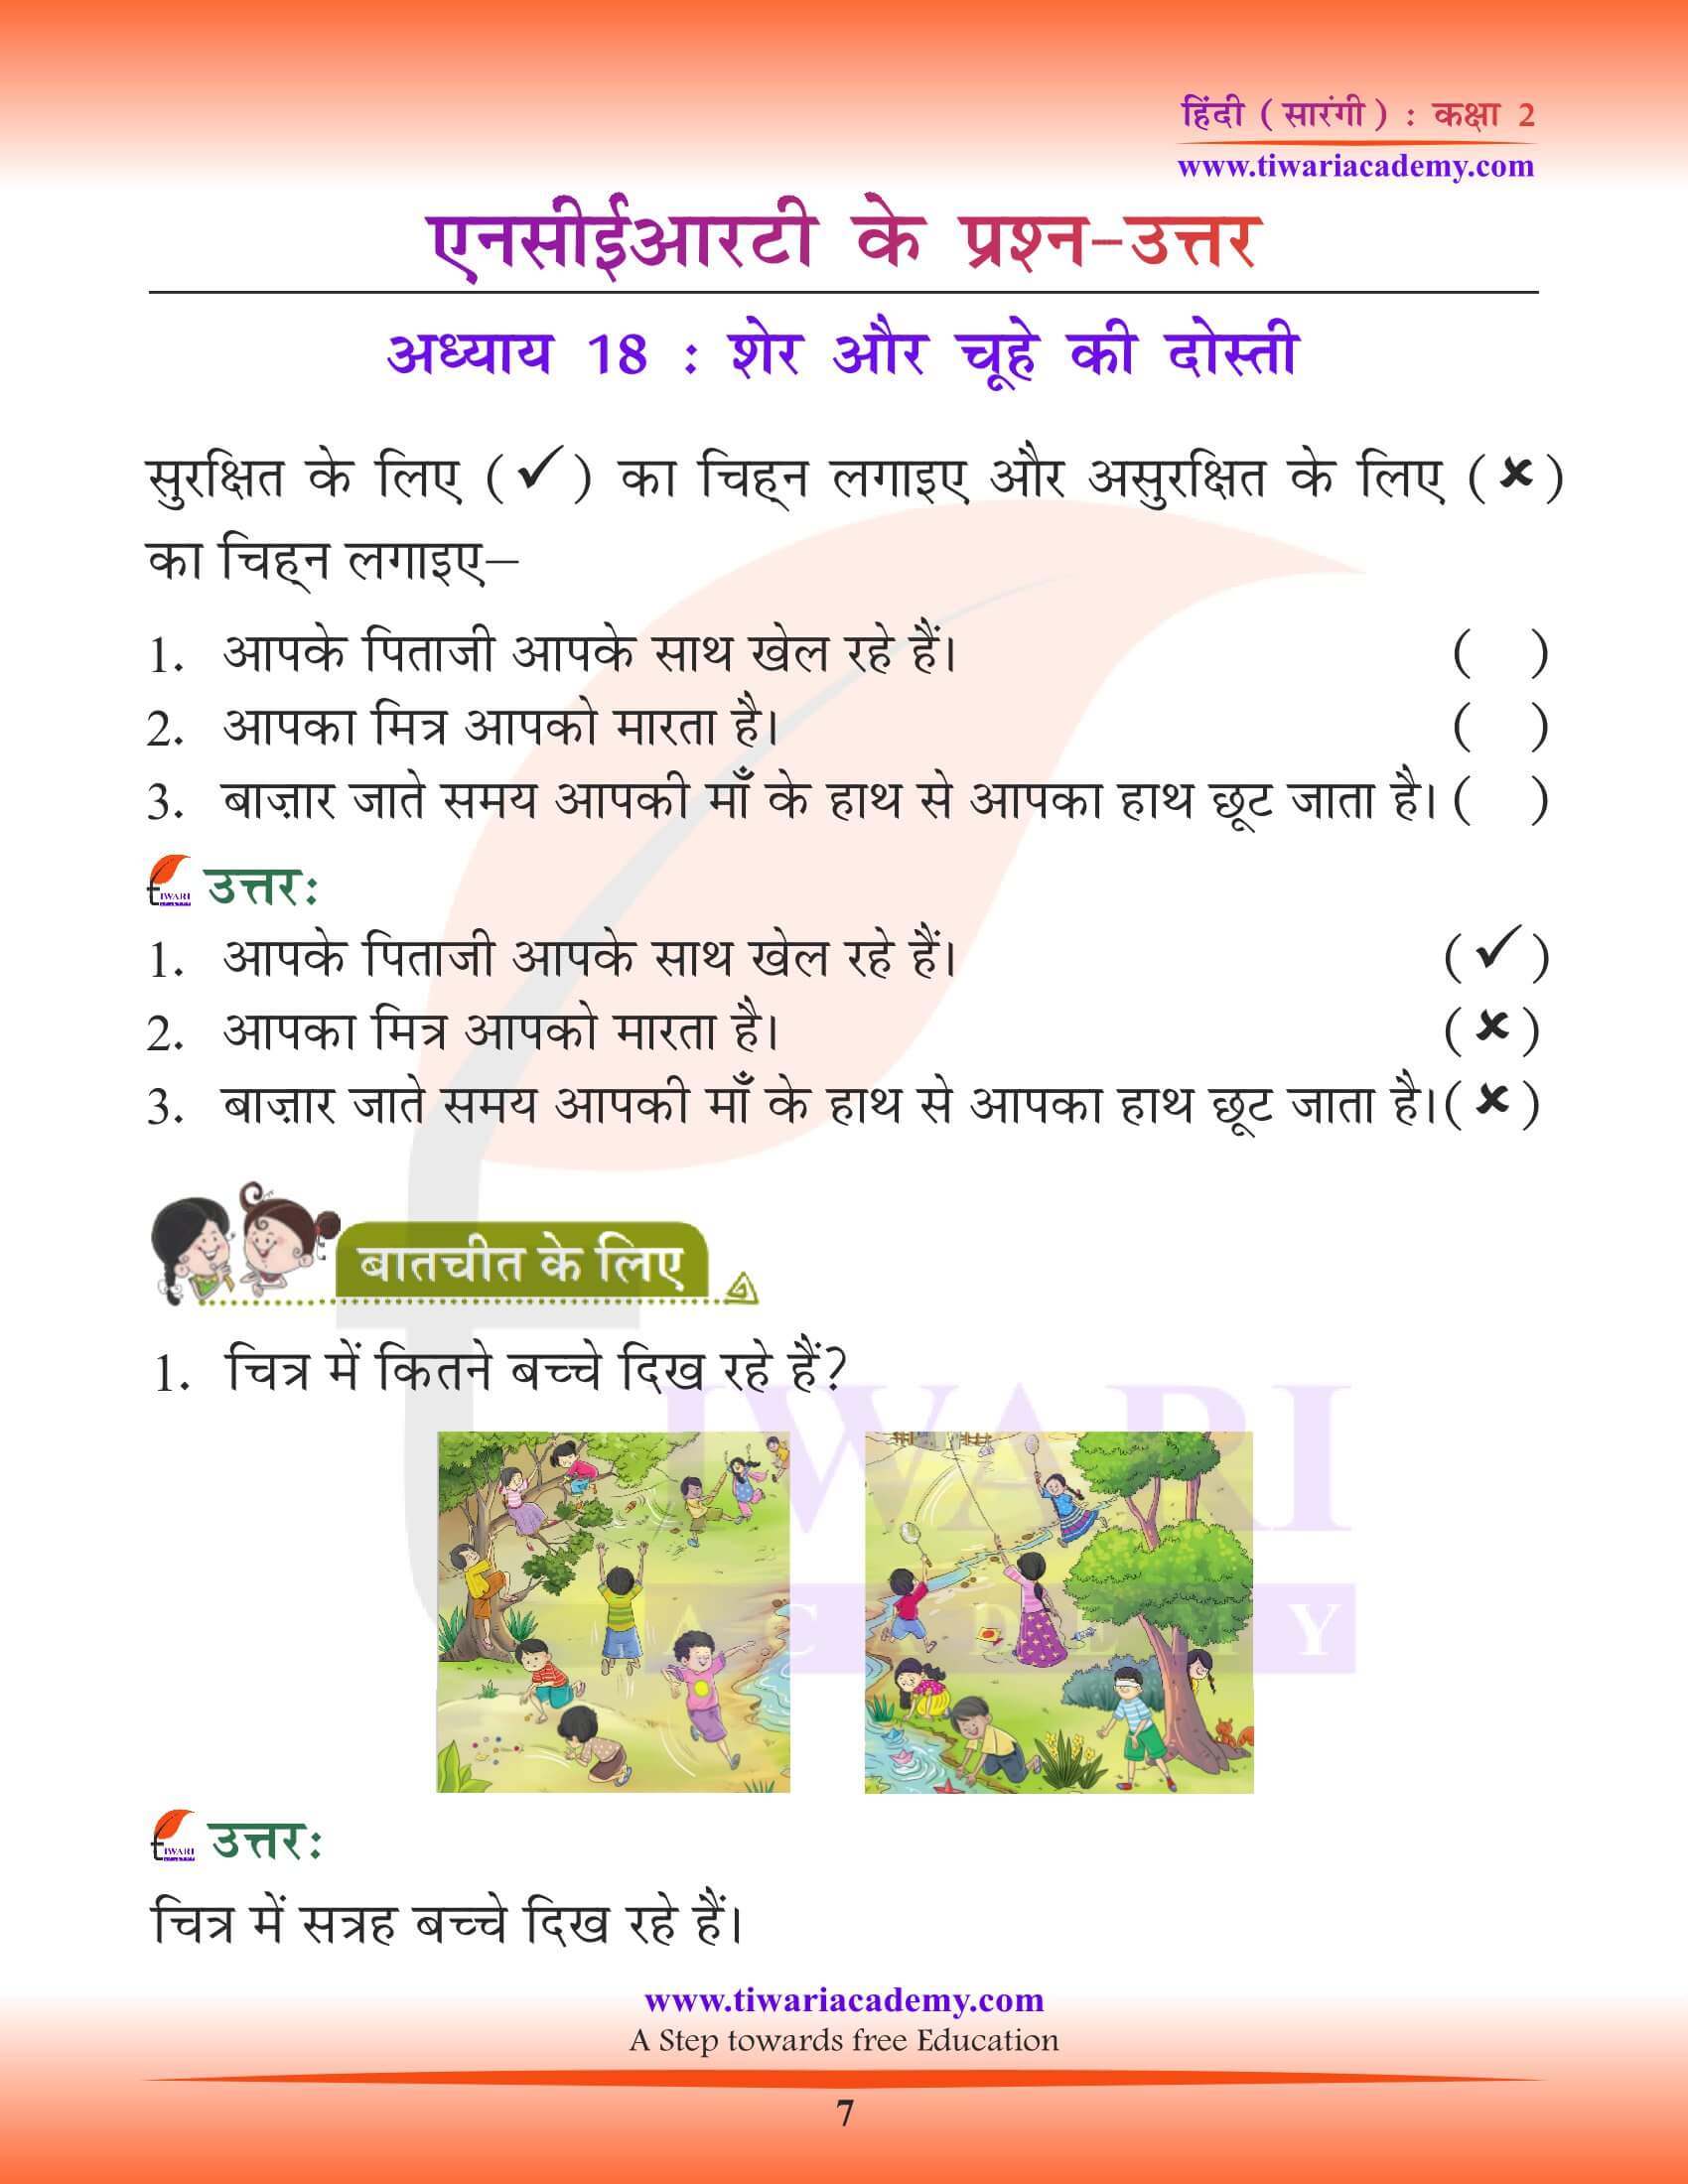 कक्षा 2 हिंदी सारंगी अध्याय 18 के लिए एनसीईआरटी समाधान